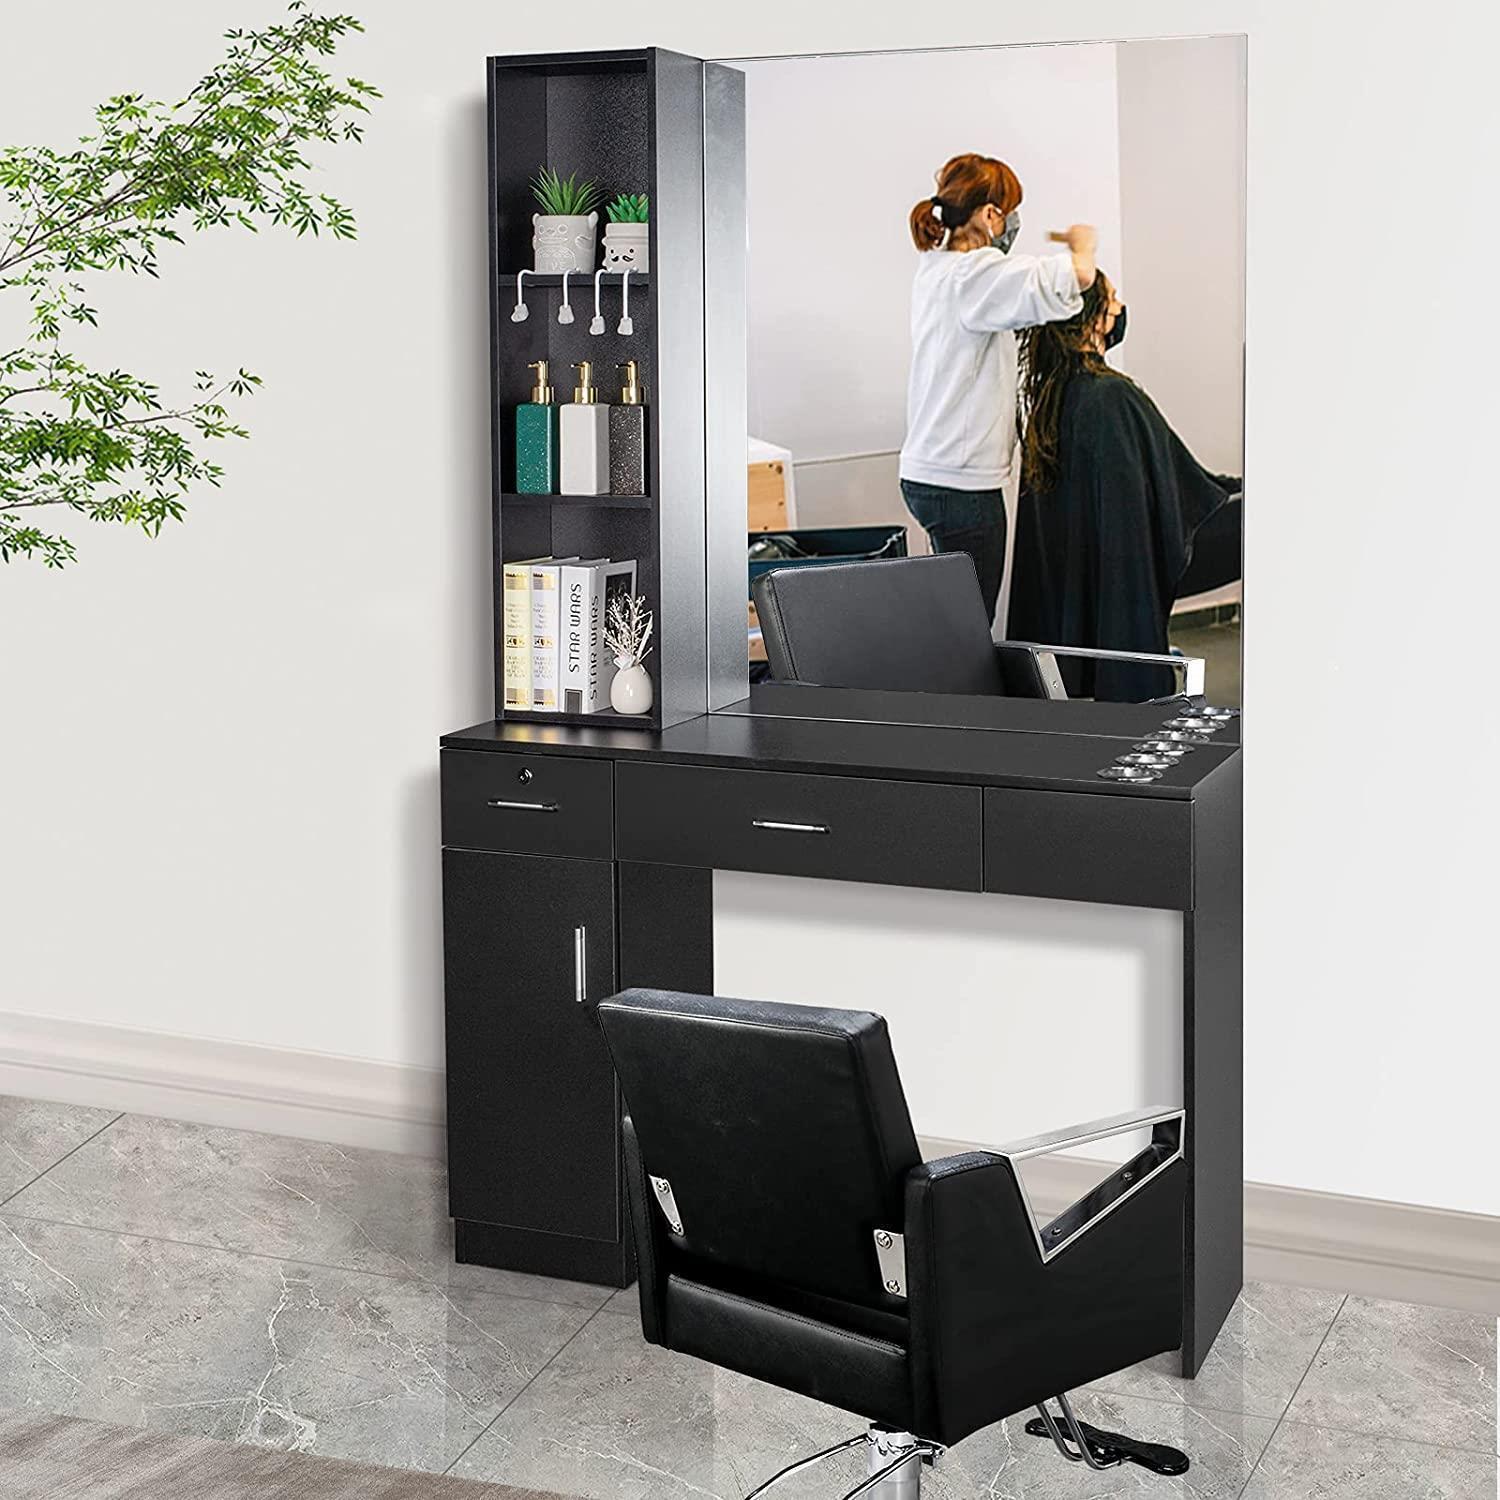 thinkstar Beauty Salon Station Table Hair Styling Barber Storage Cabinet Shelves W/ Mirror